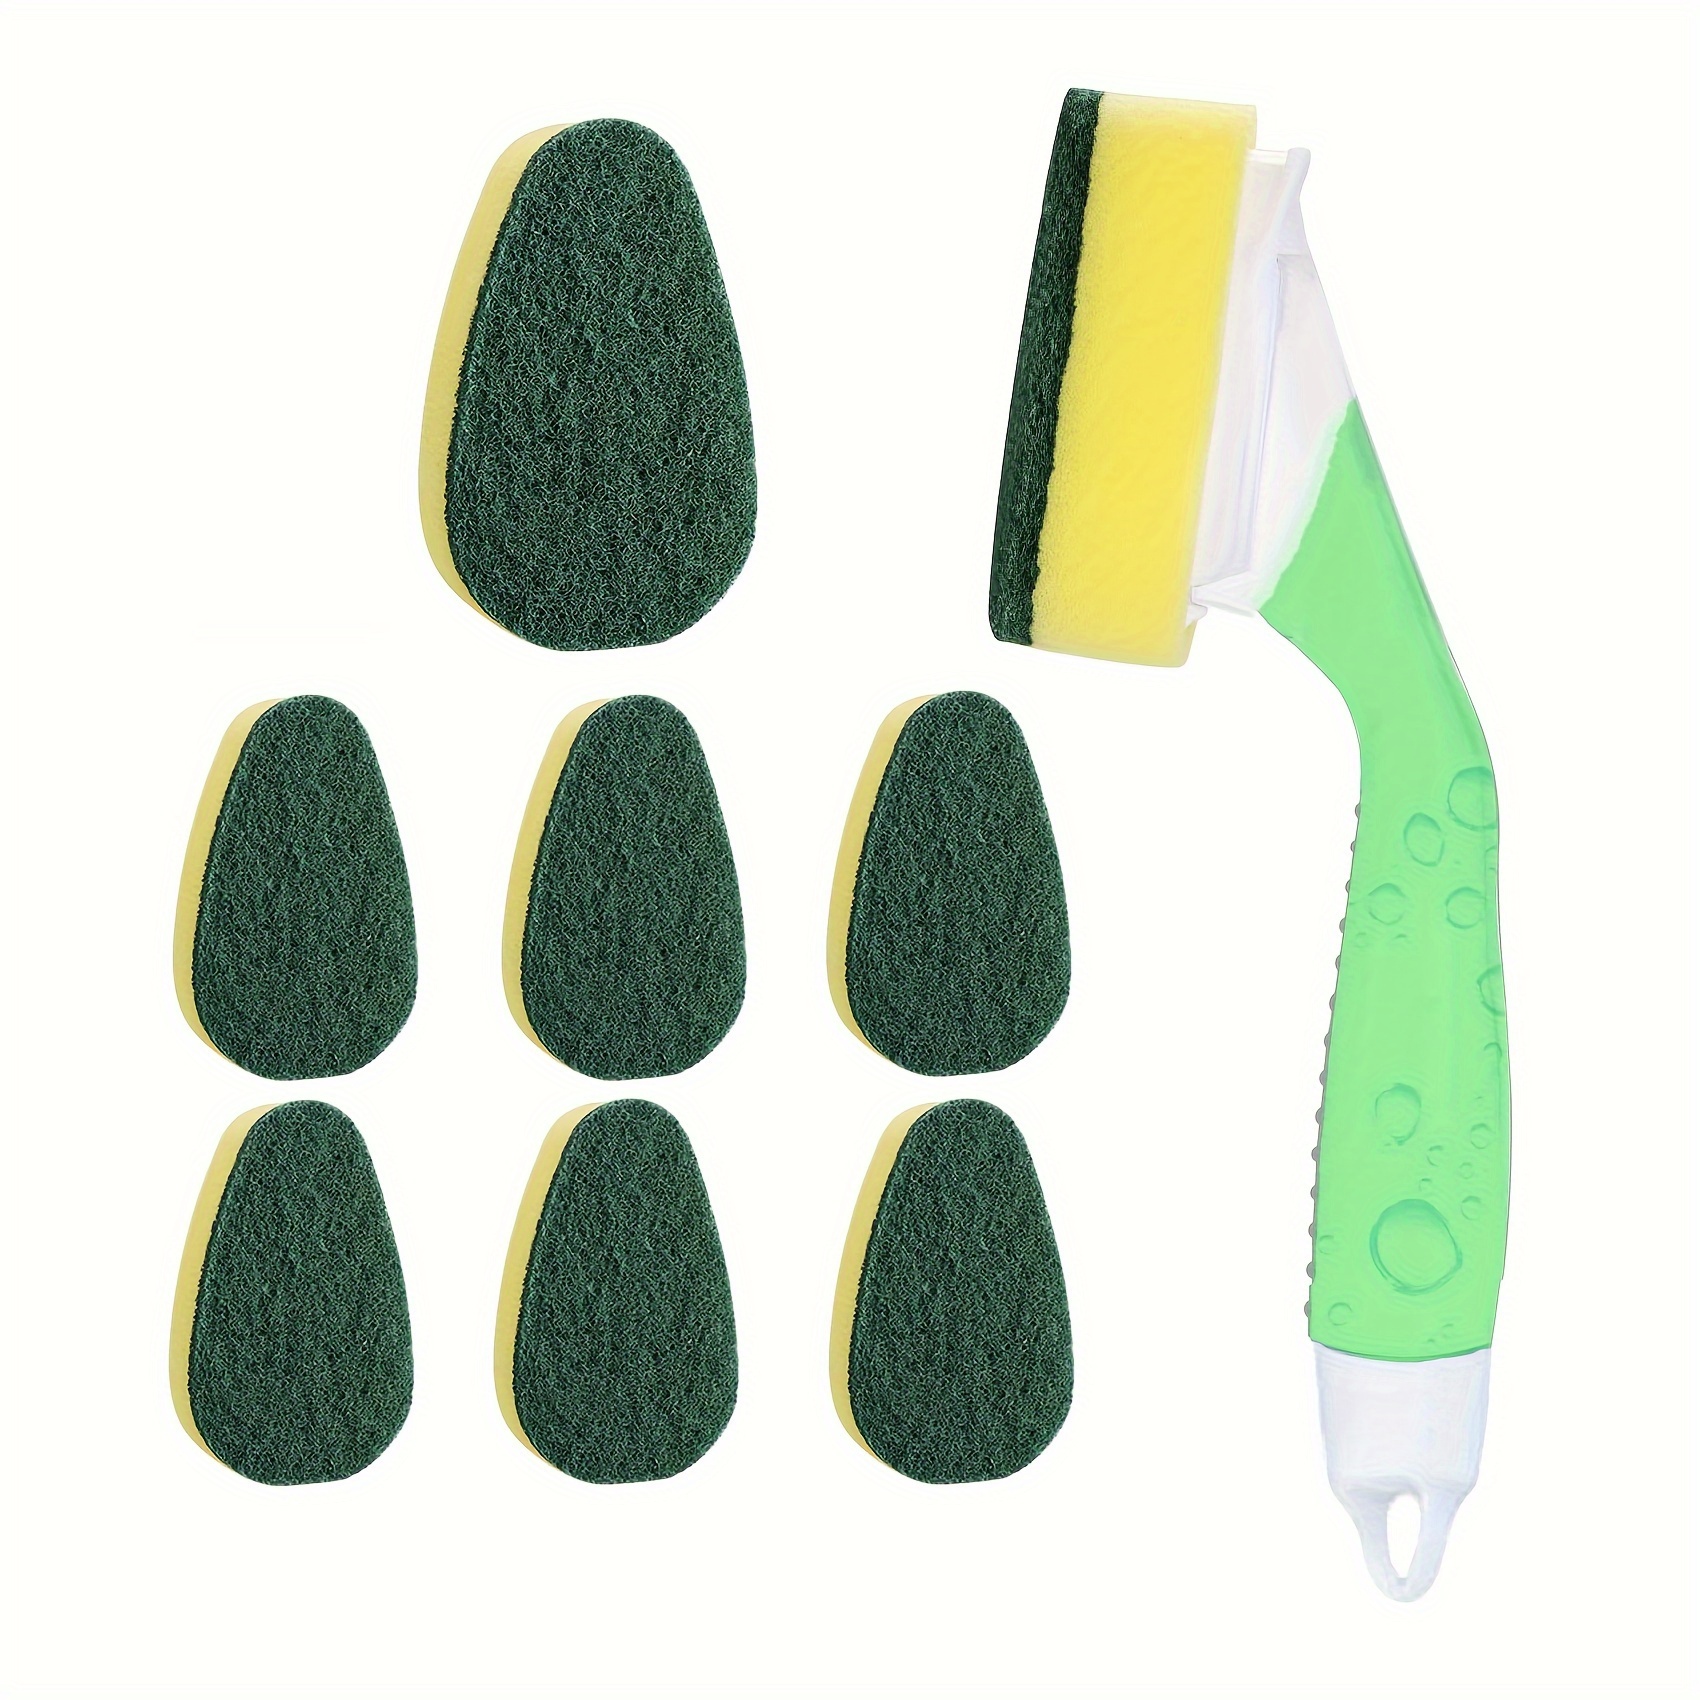 Wand Sponge With Handle Kitchen Scrubber Brush Dish Brush Refills